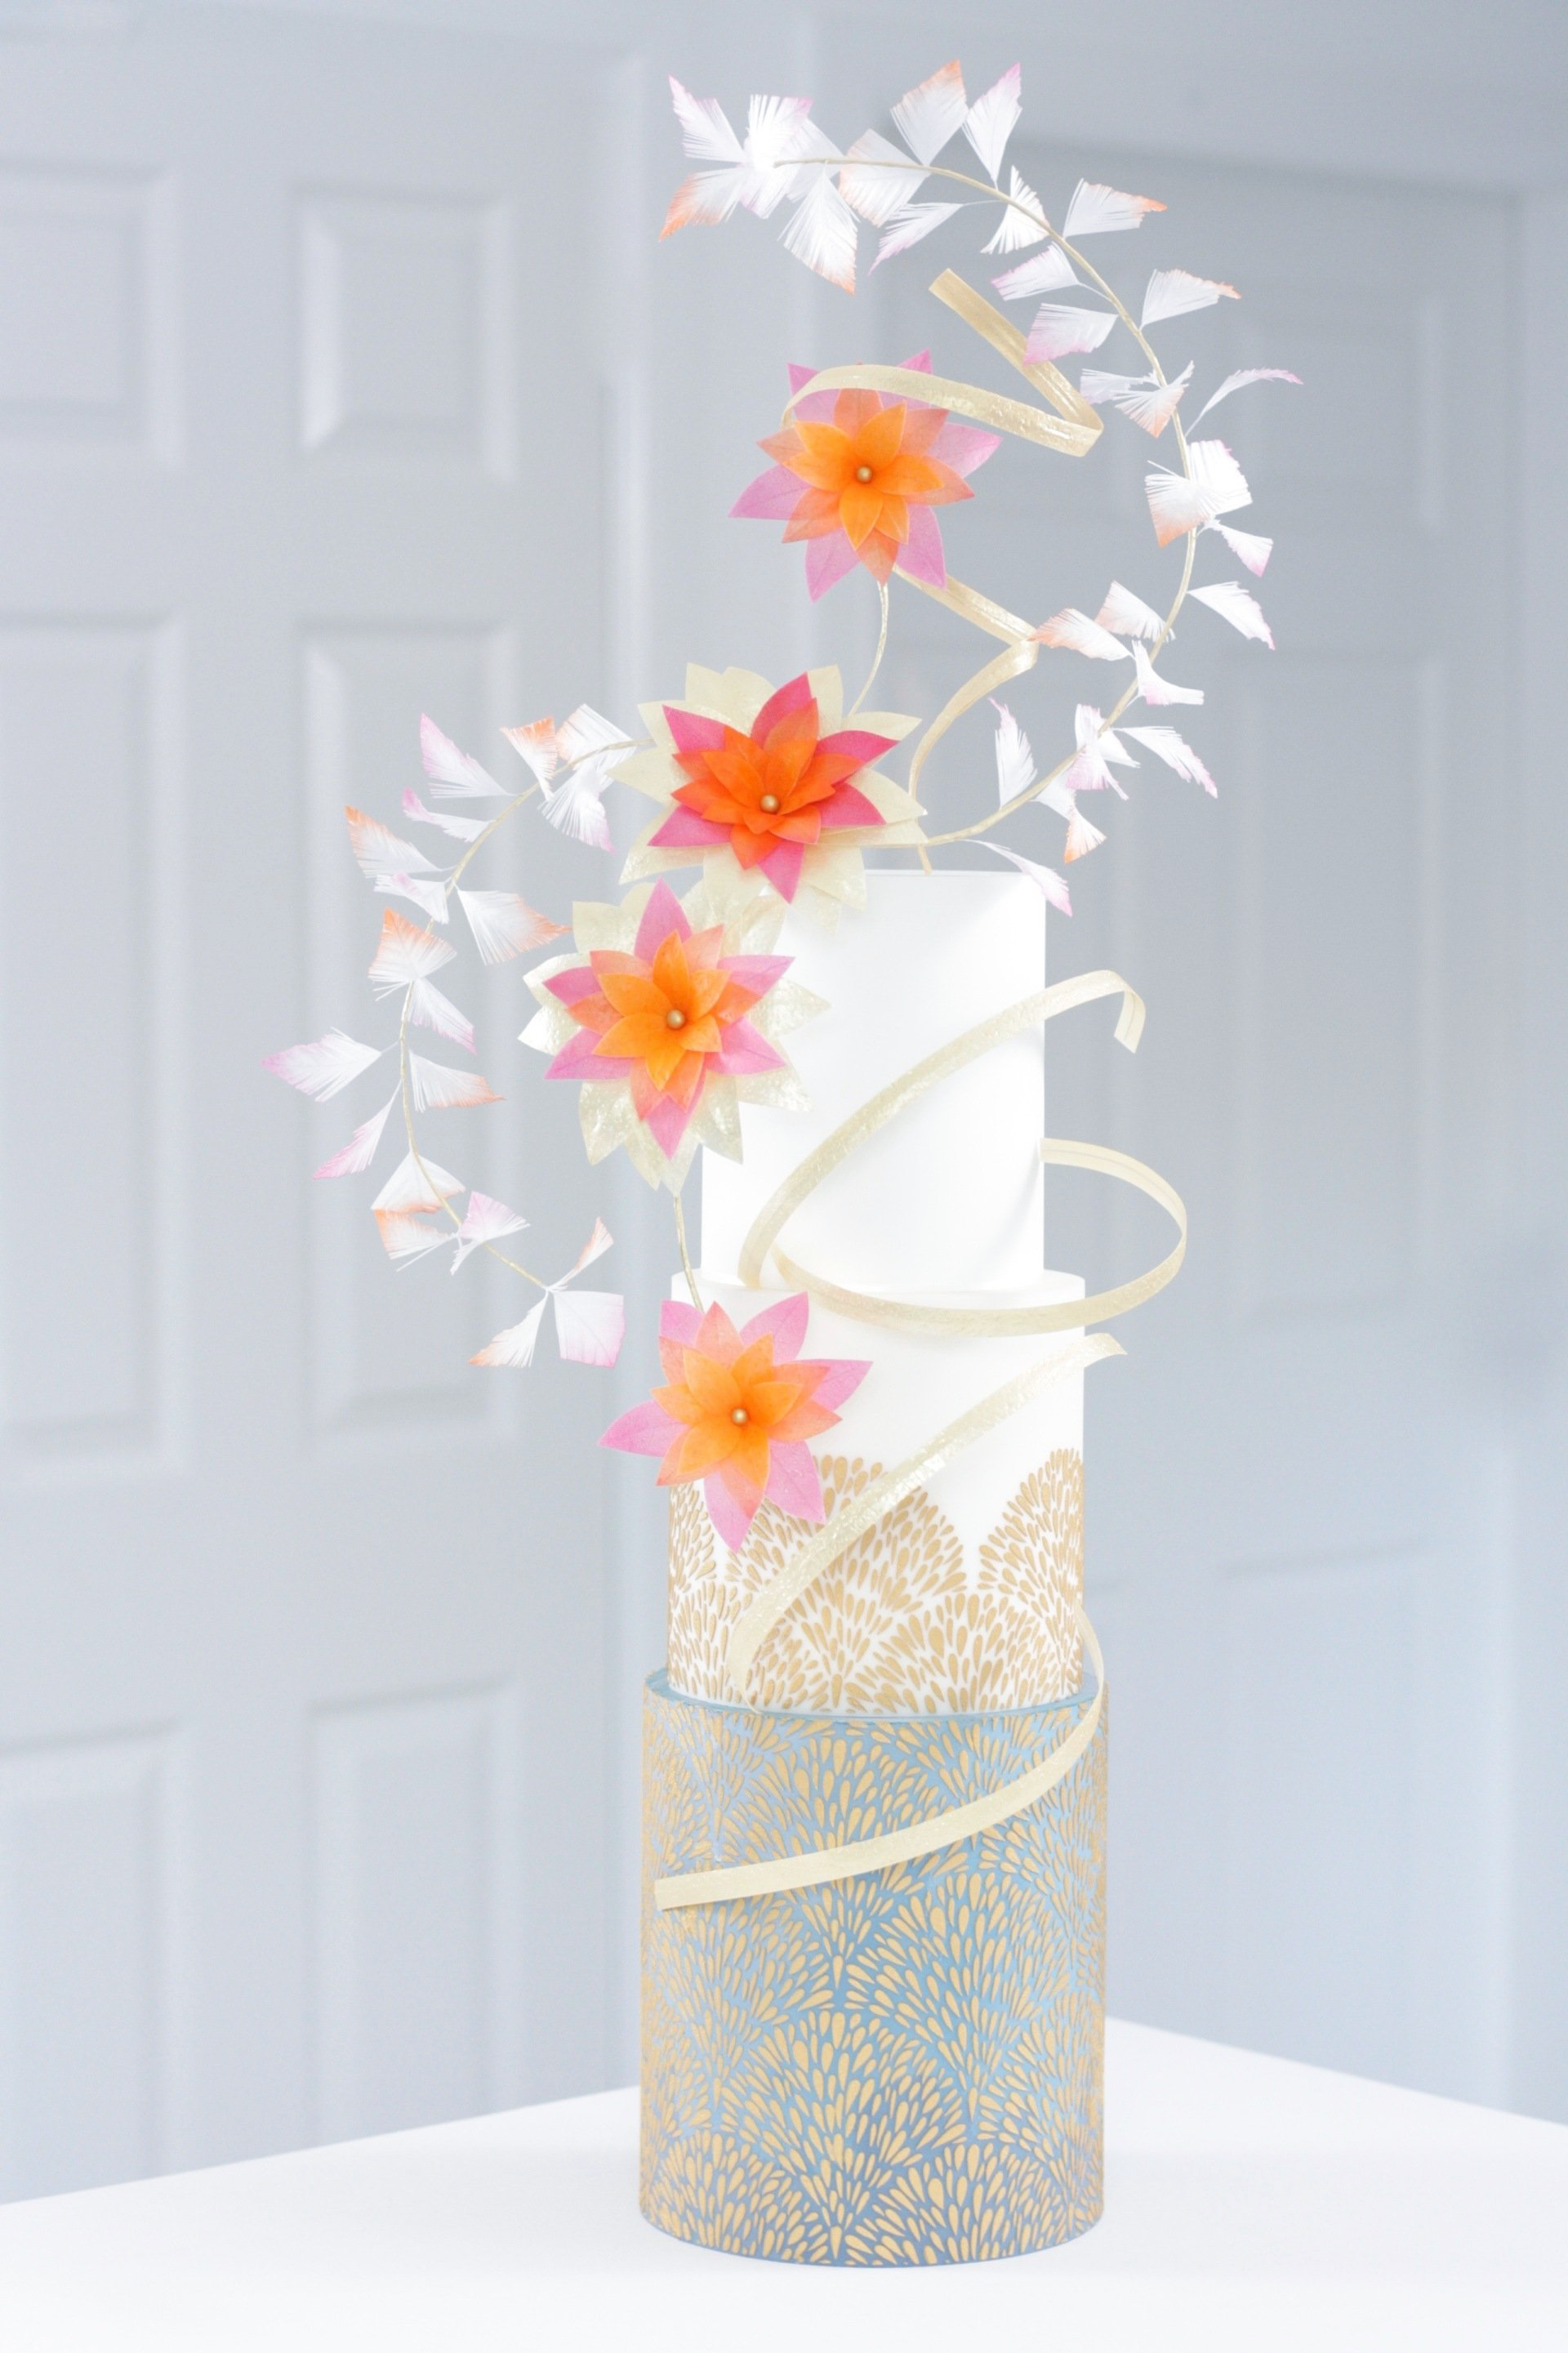 Whimsical  wafer paper flowers & fan stencil wedding cake